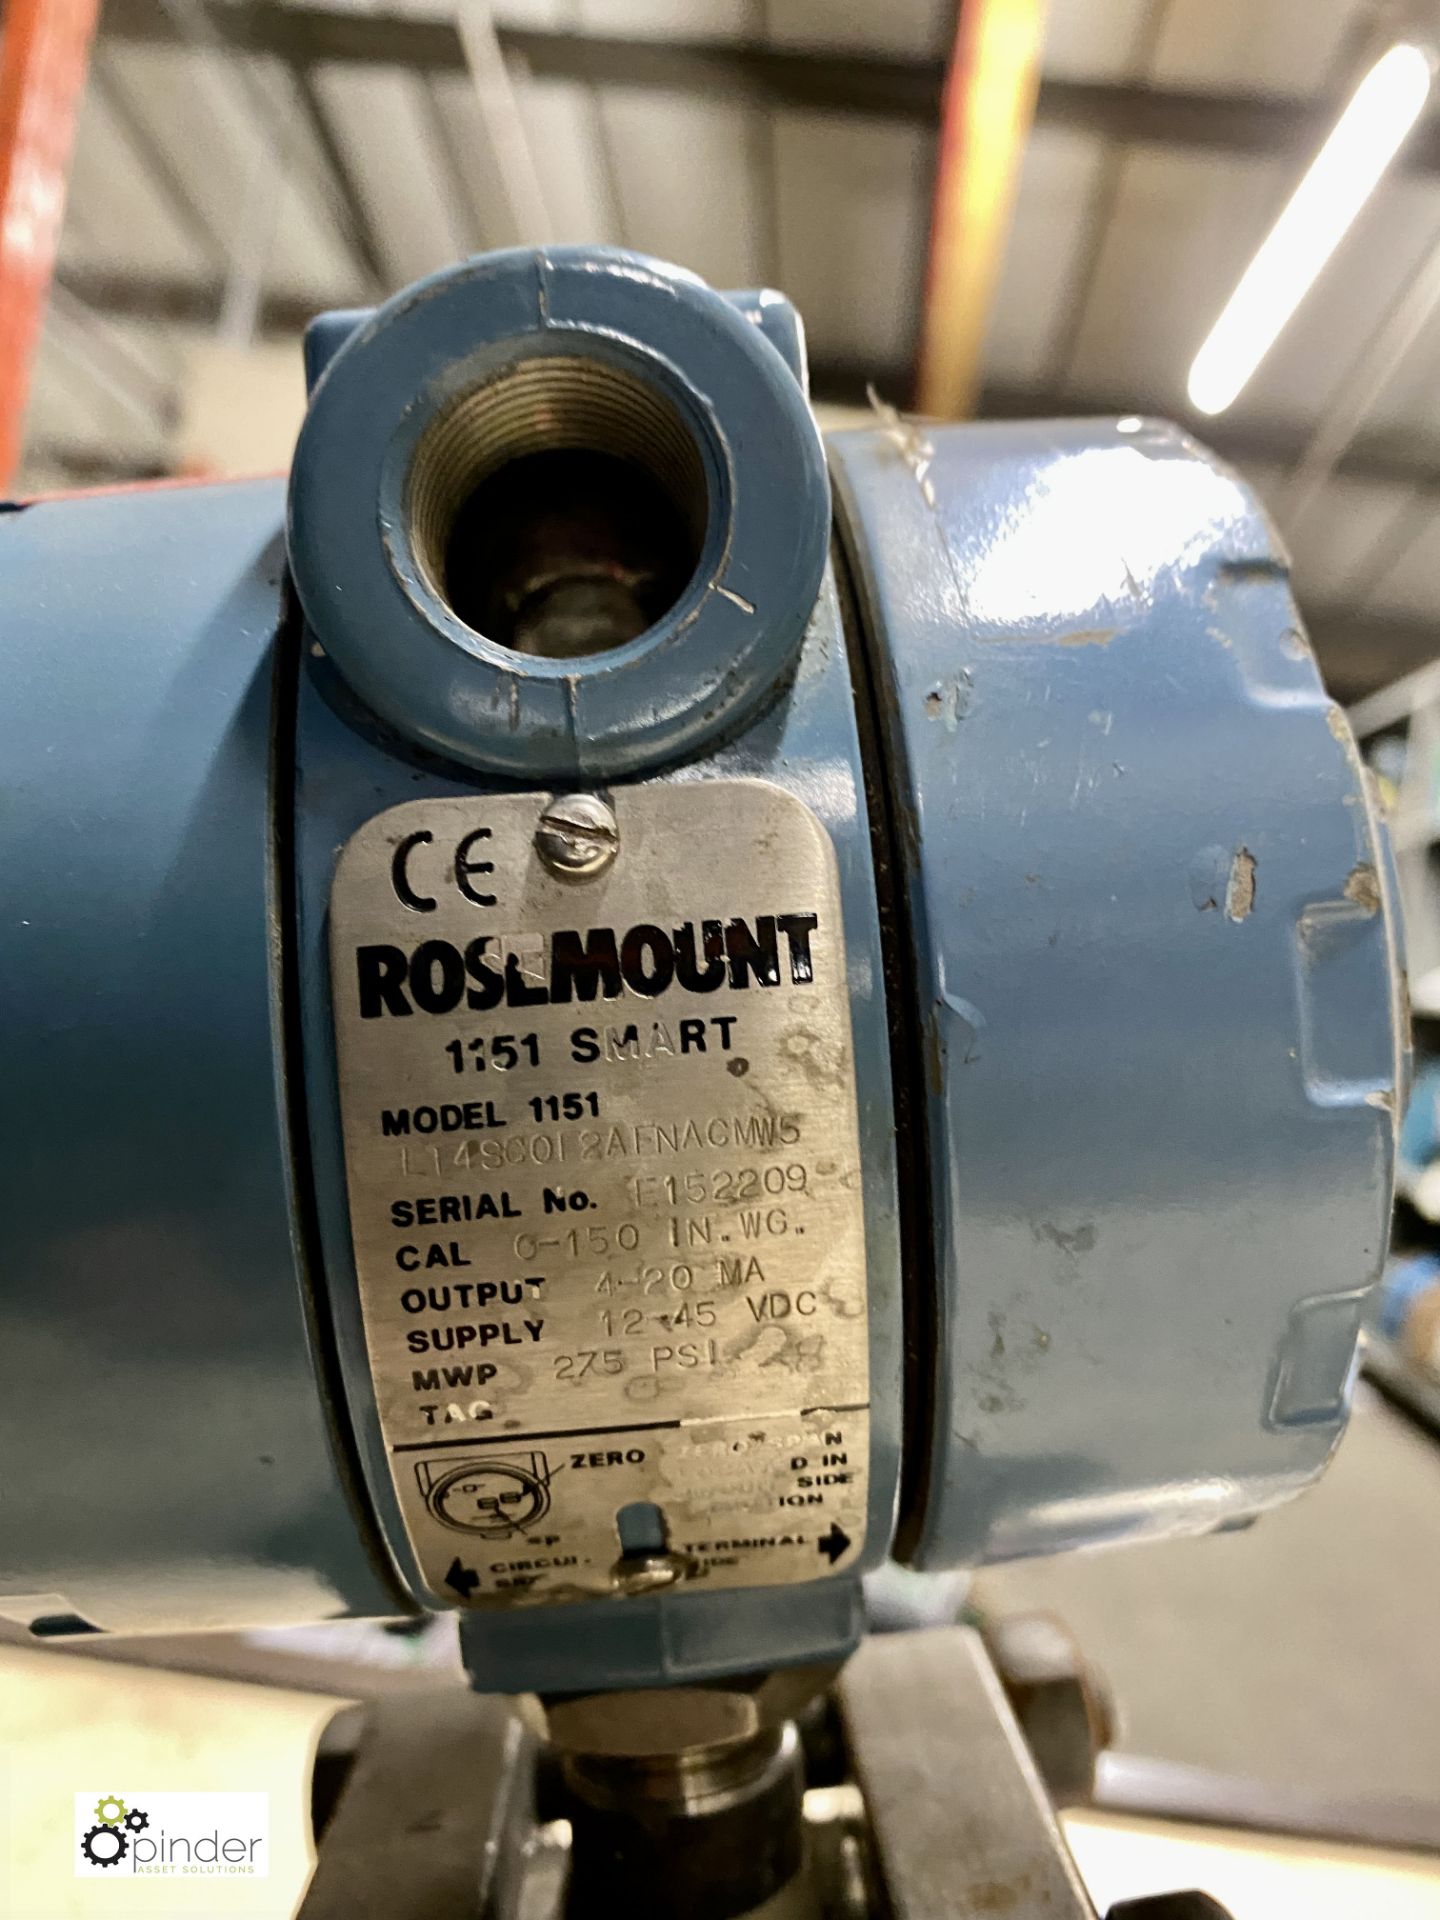 Rosemount 1151 Smart Pressure Transmitter LT4SCOF2 - Image 3 of 4